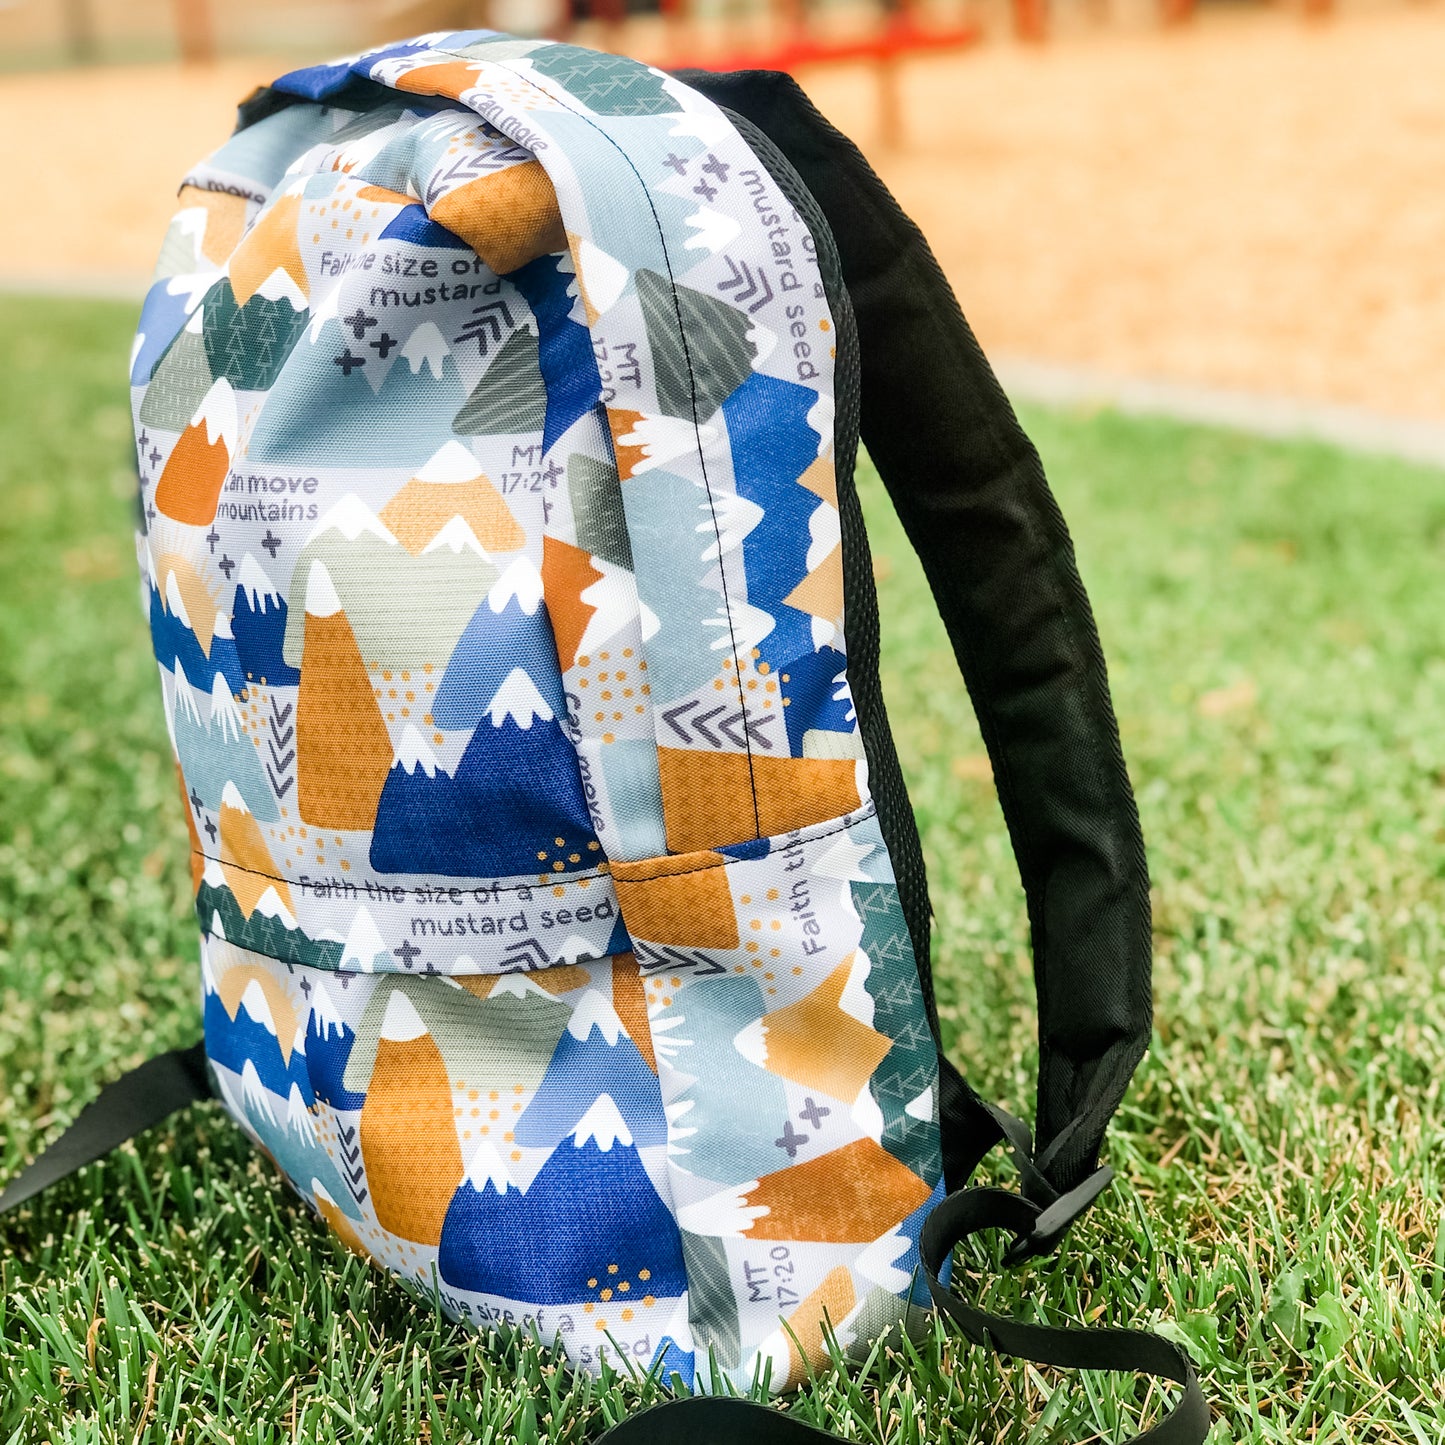 Faith inspired Backpack